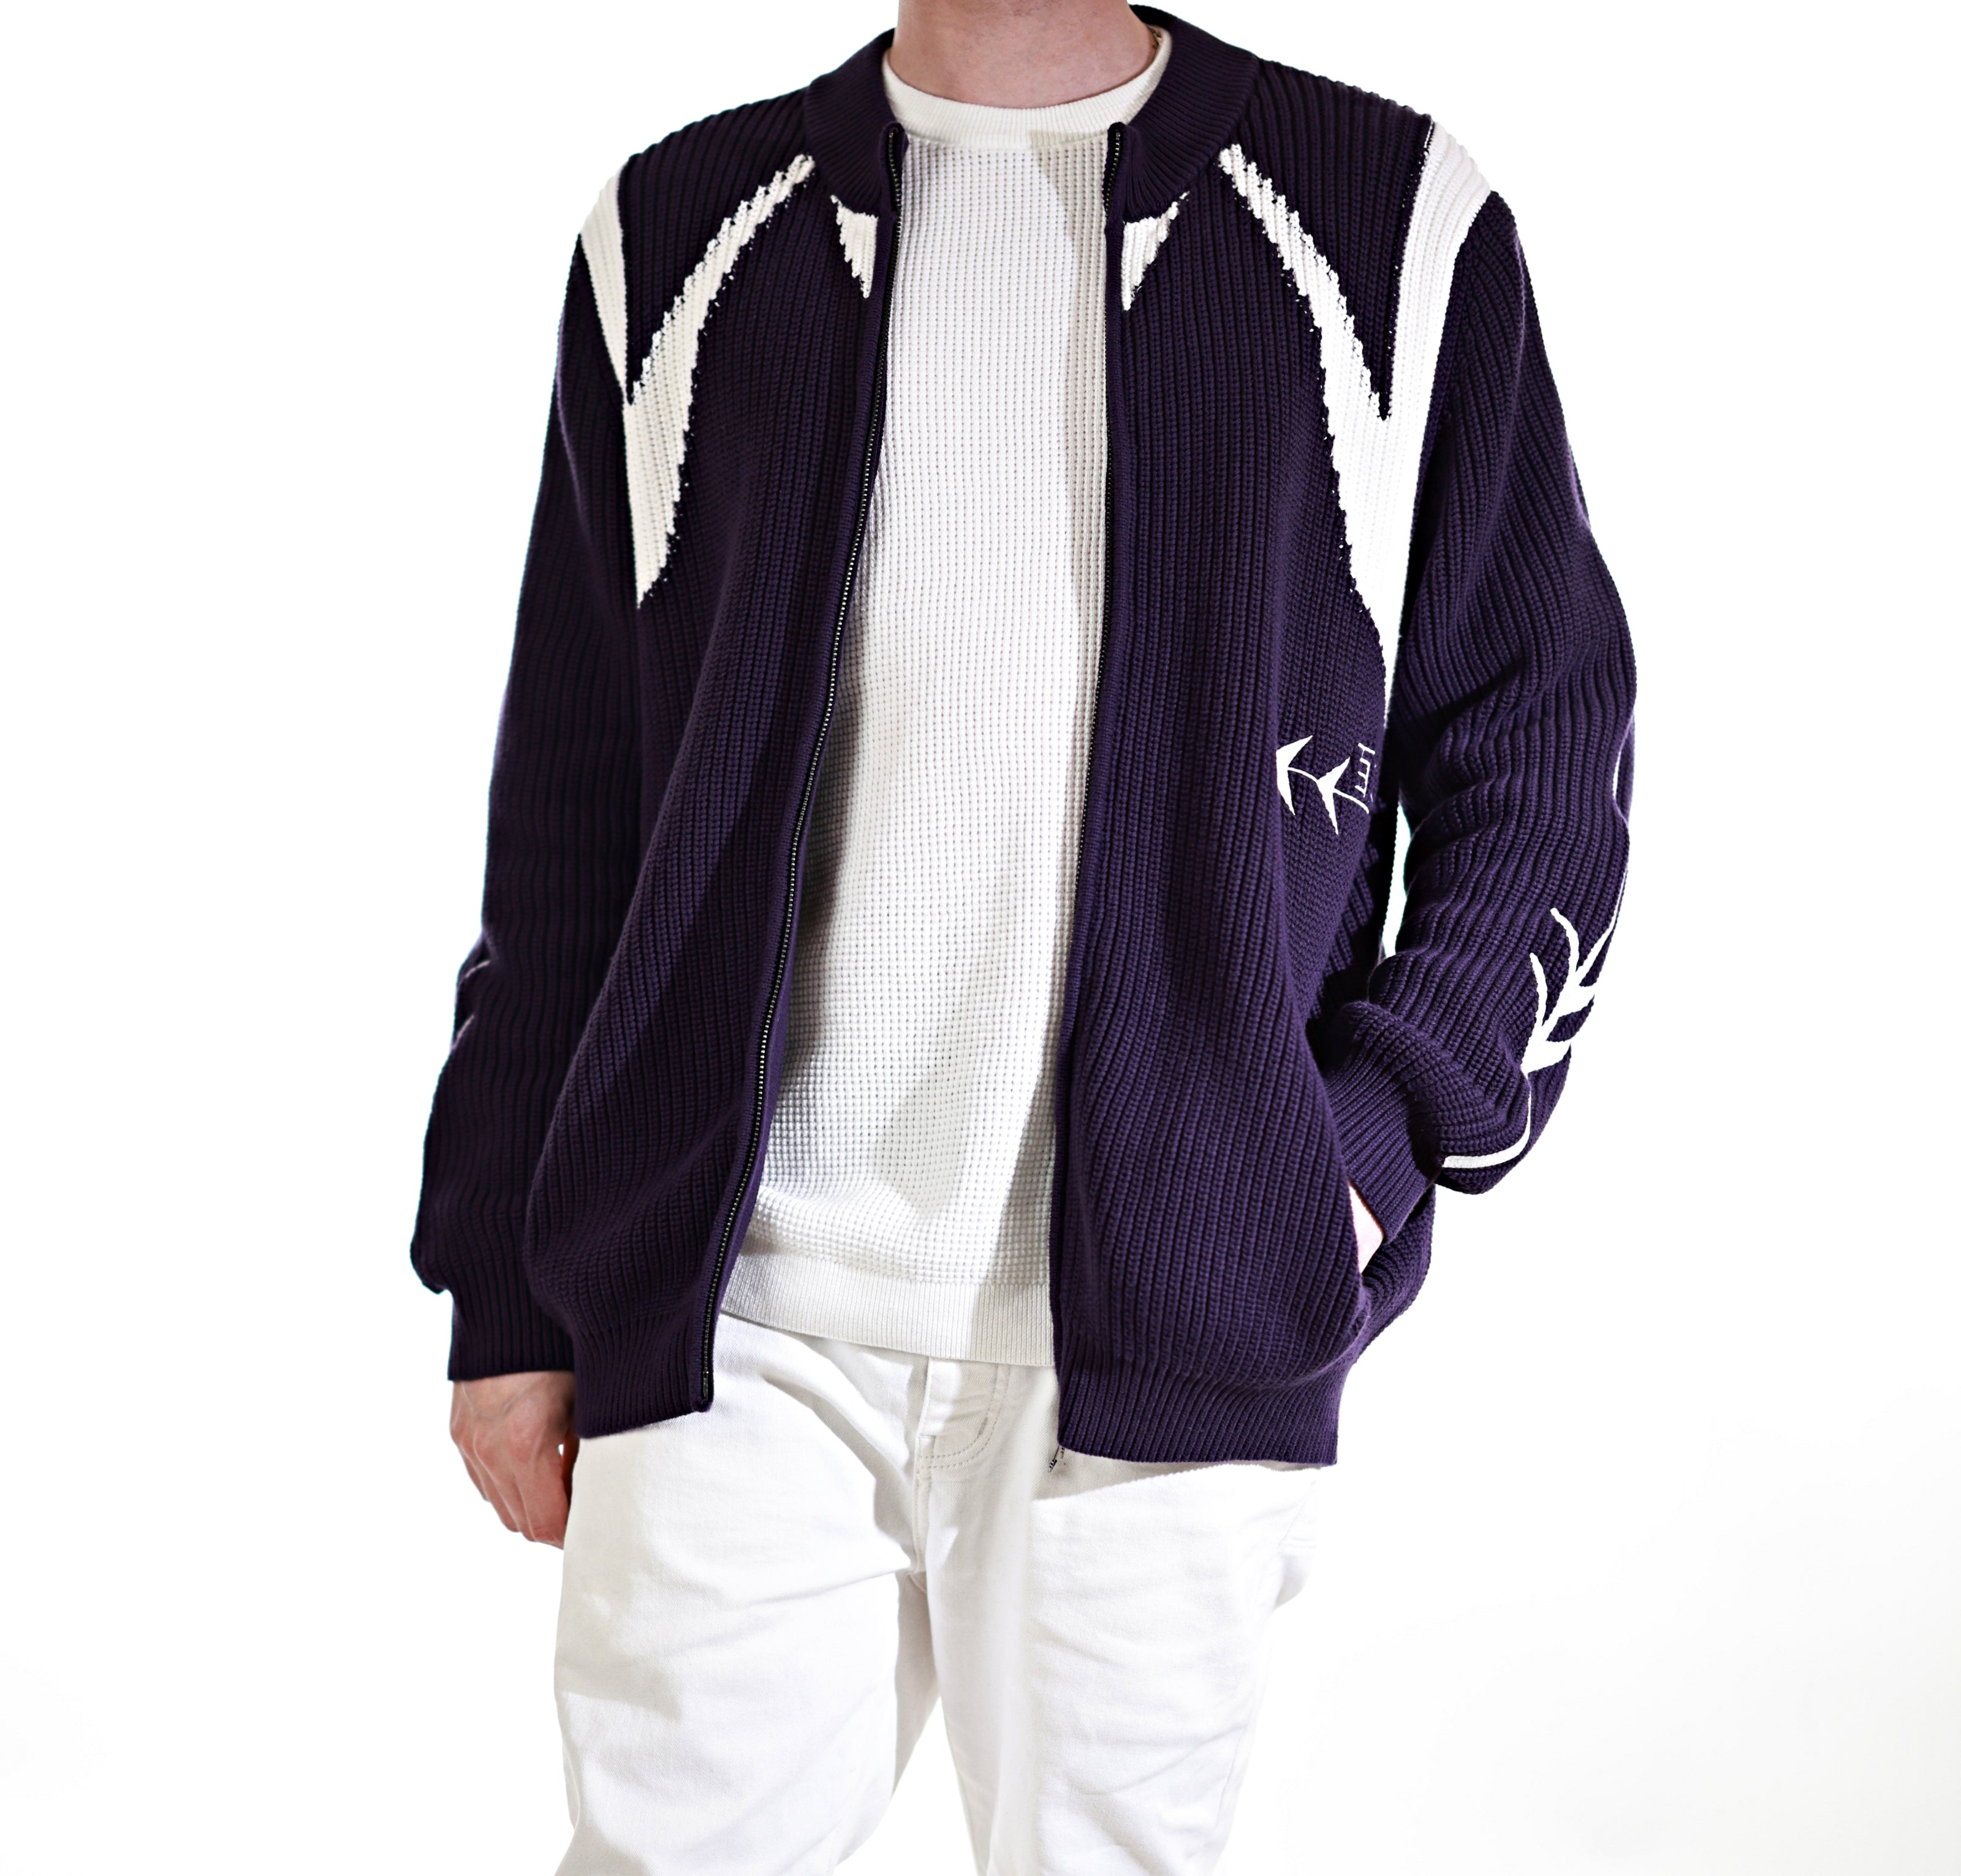 Onii-chan Intarsia Jacket Preorder